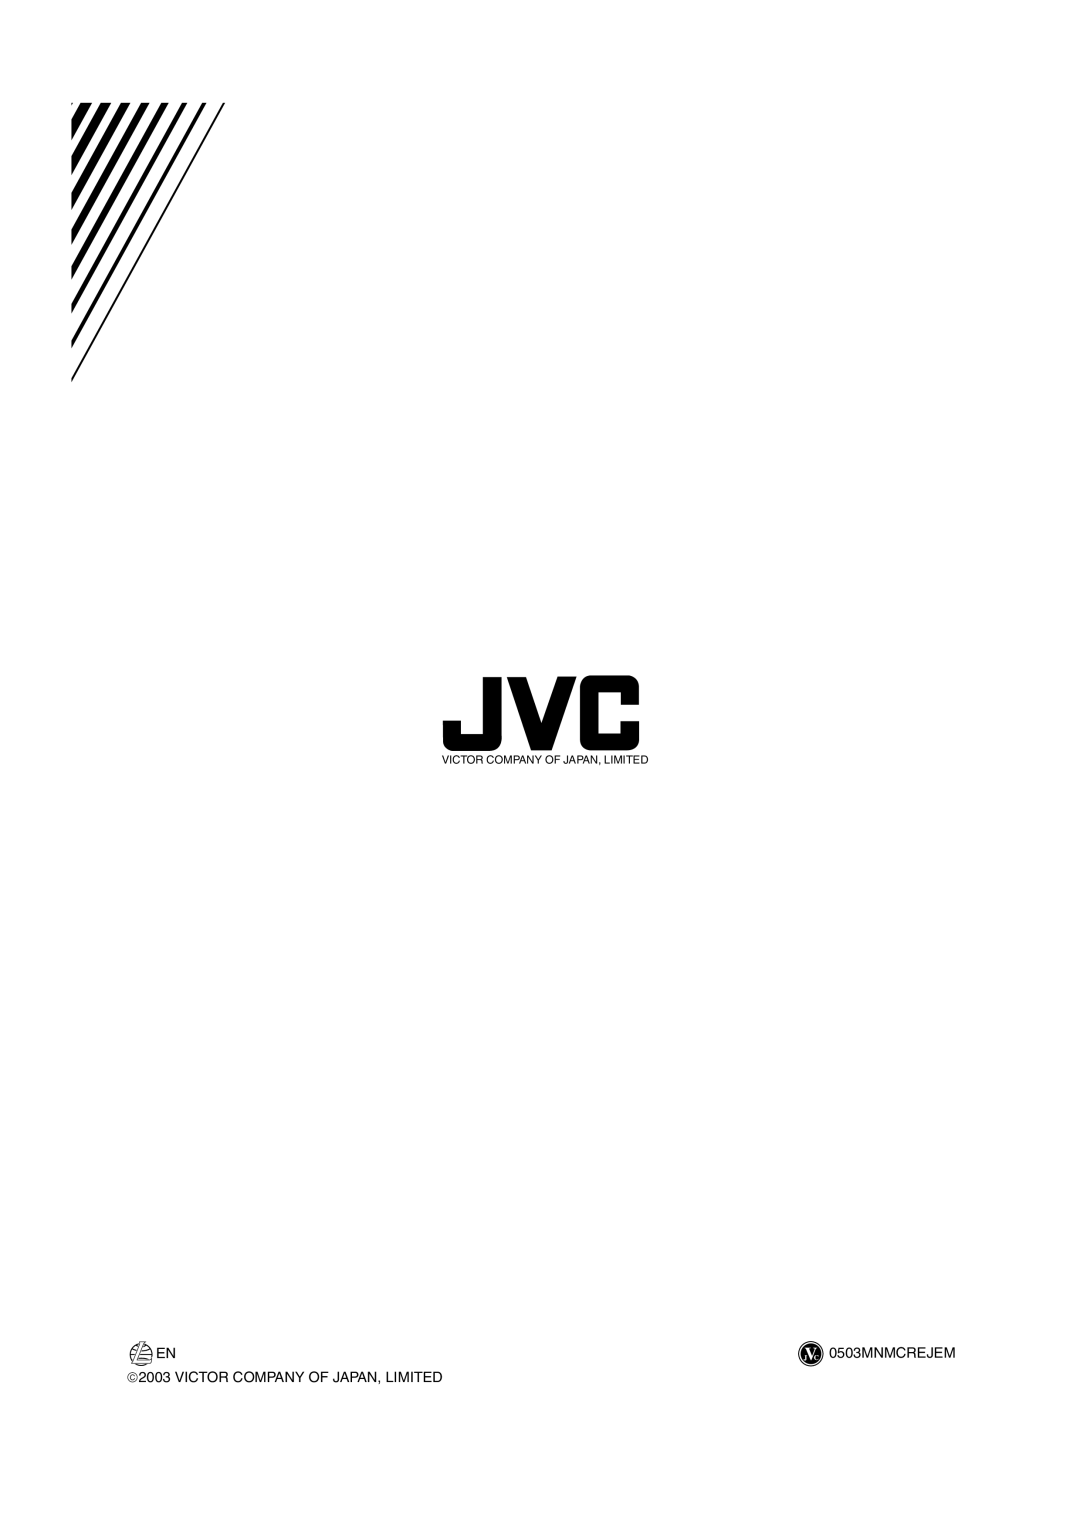 JVC LVT1040-008A manual 0503MNMCREJEM, 2003 VICTOR COMPANY OF JAPAN, LIMITED, Victor Company Of Japan, Limited 